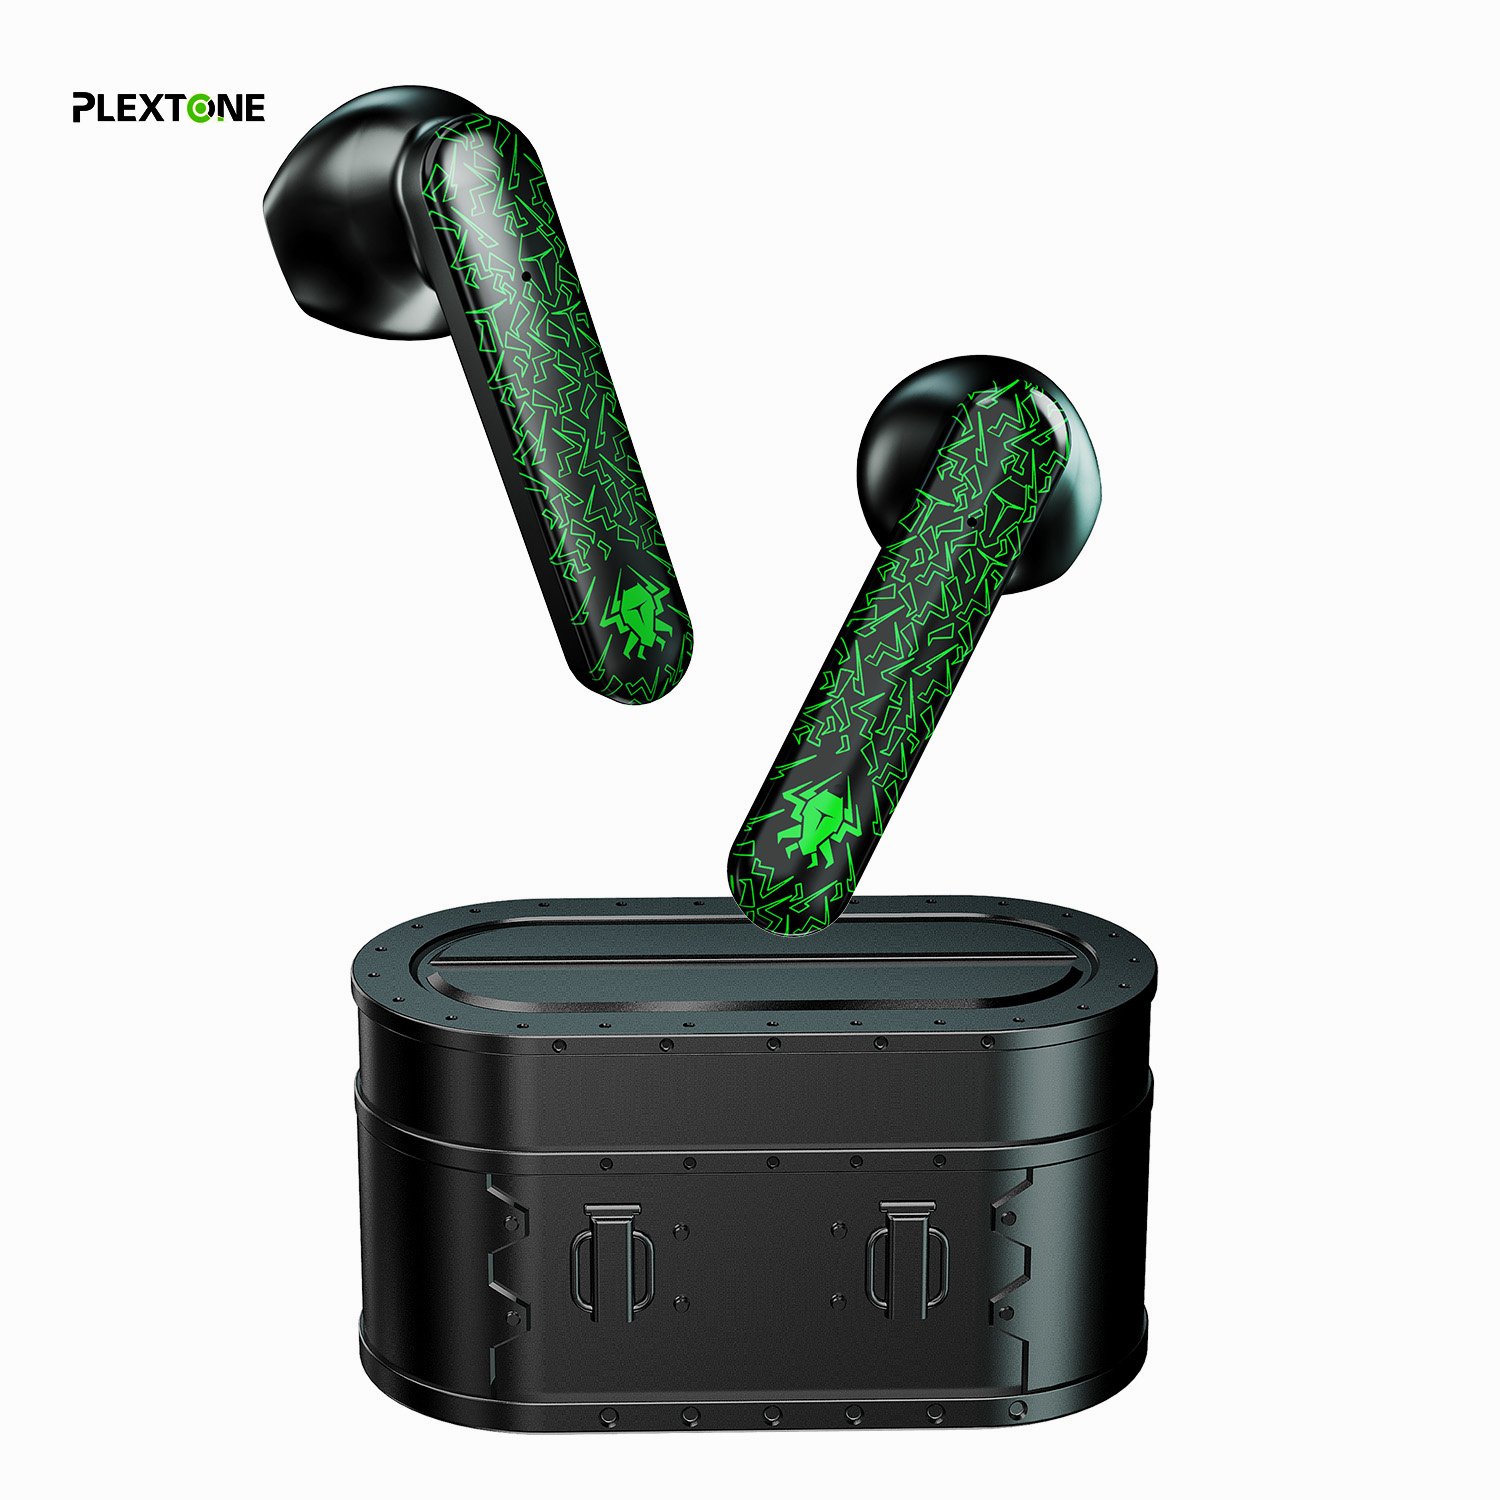 Plextone 4game Bt5.1 Low Latency True Wireless Earbuds Earphone Gaming Headsets For Mobile